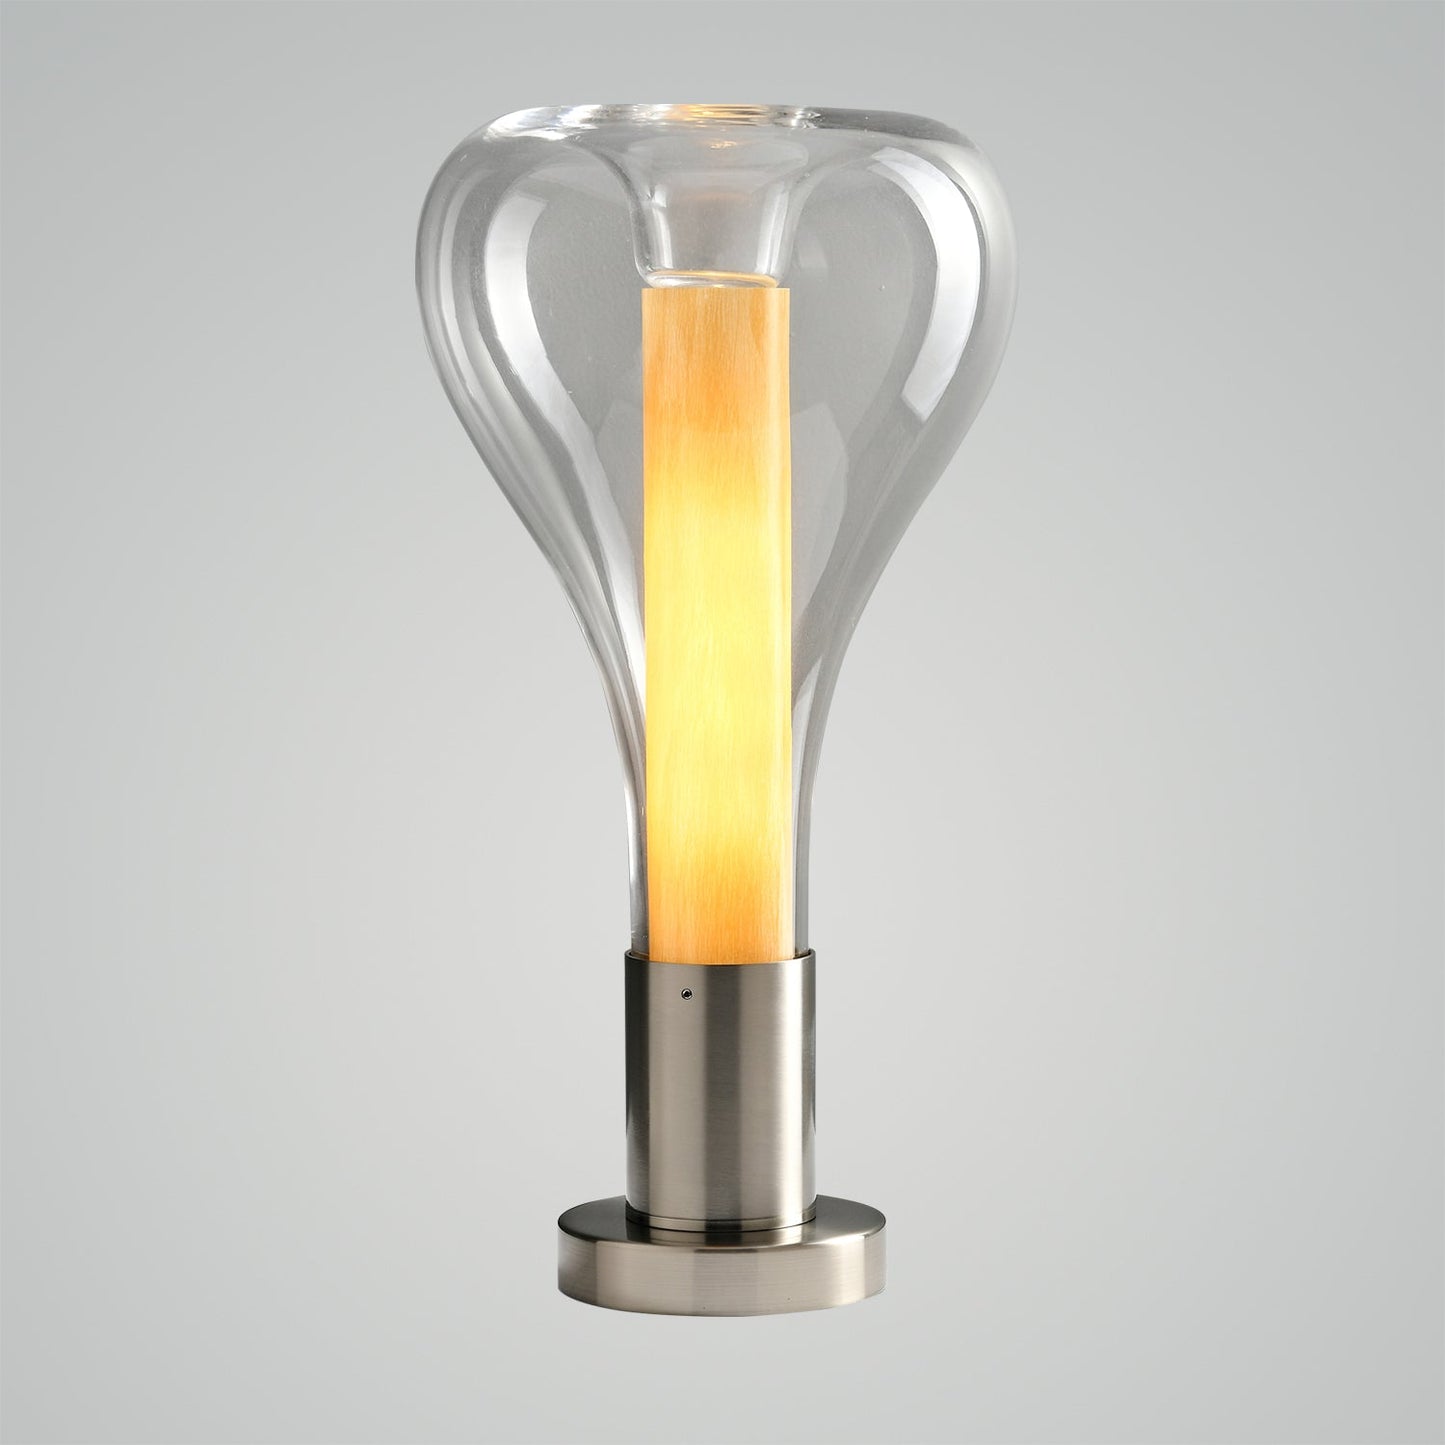 Round Translucent Wood Grain Glass Table Lamp - ERIS Table Lamp